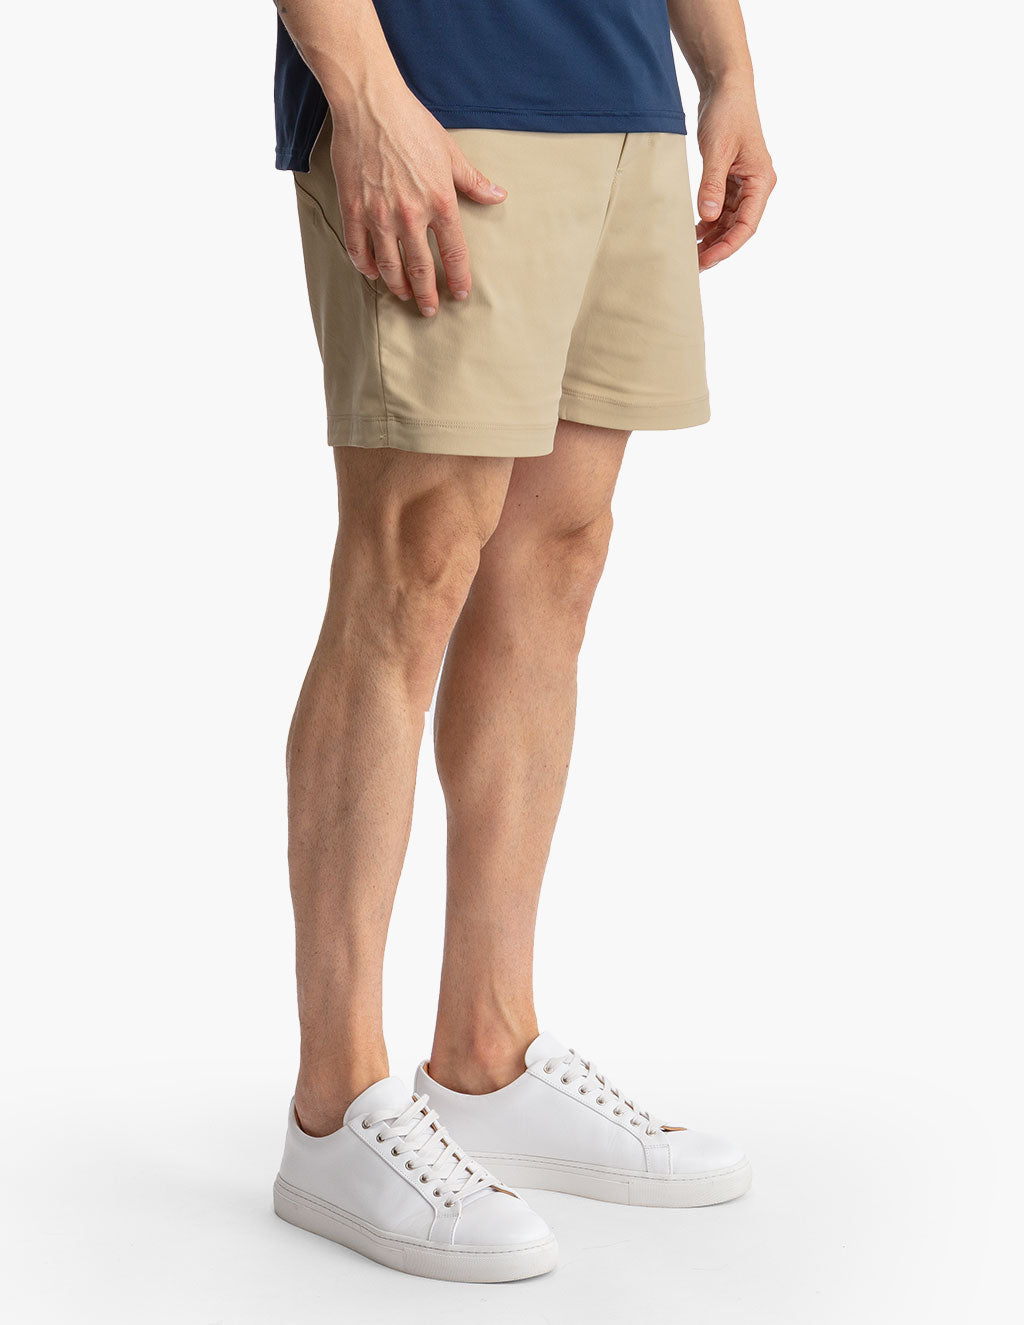 Fashion Style Men Sleep Bottoms Underwear Long Boxer Knee Length Shorts  Sexy Low Waist Sleepwear Brand Casual